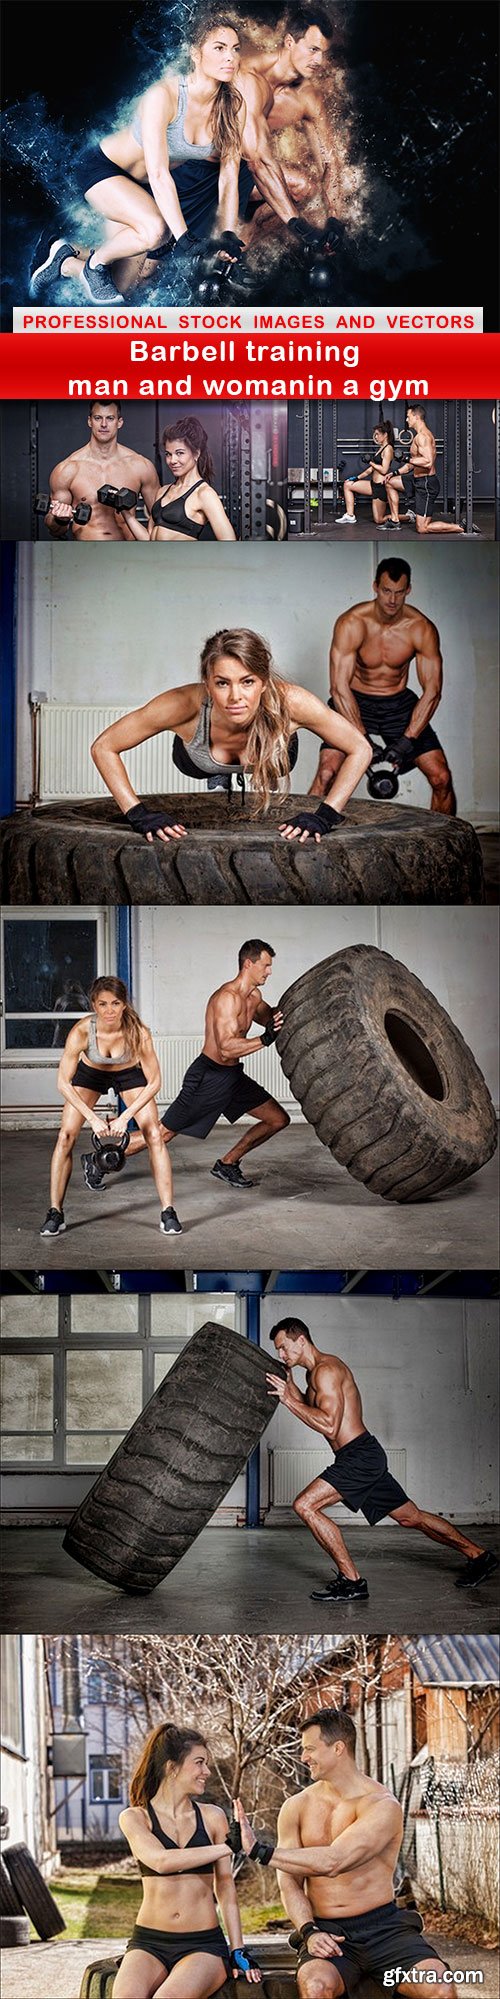 Barbell training man and womanin a gym - 7 UHQ JPEG